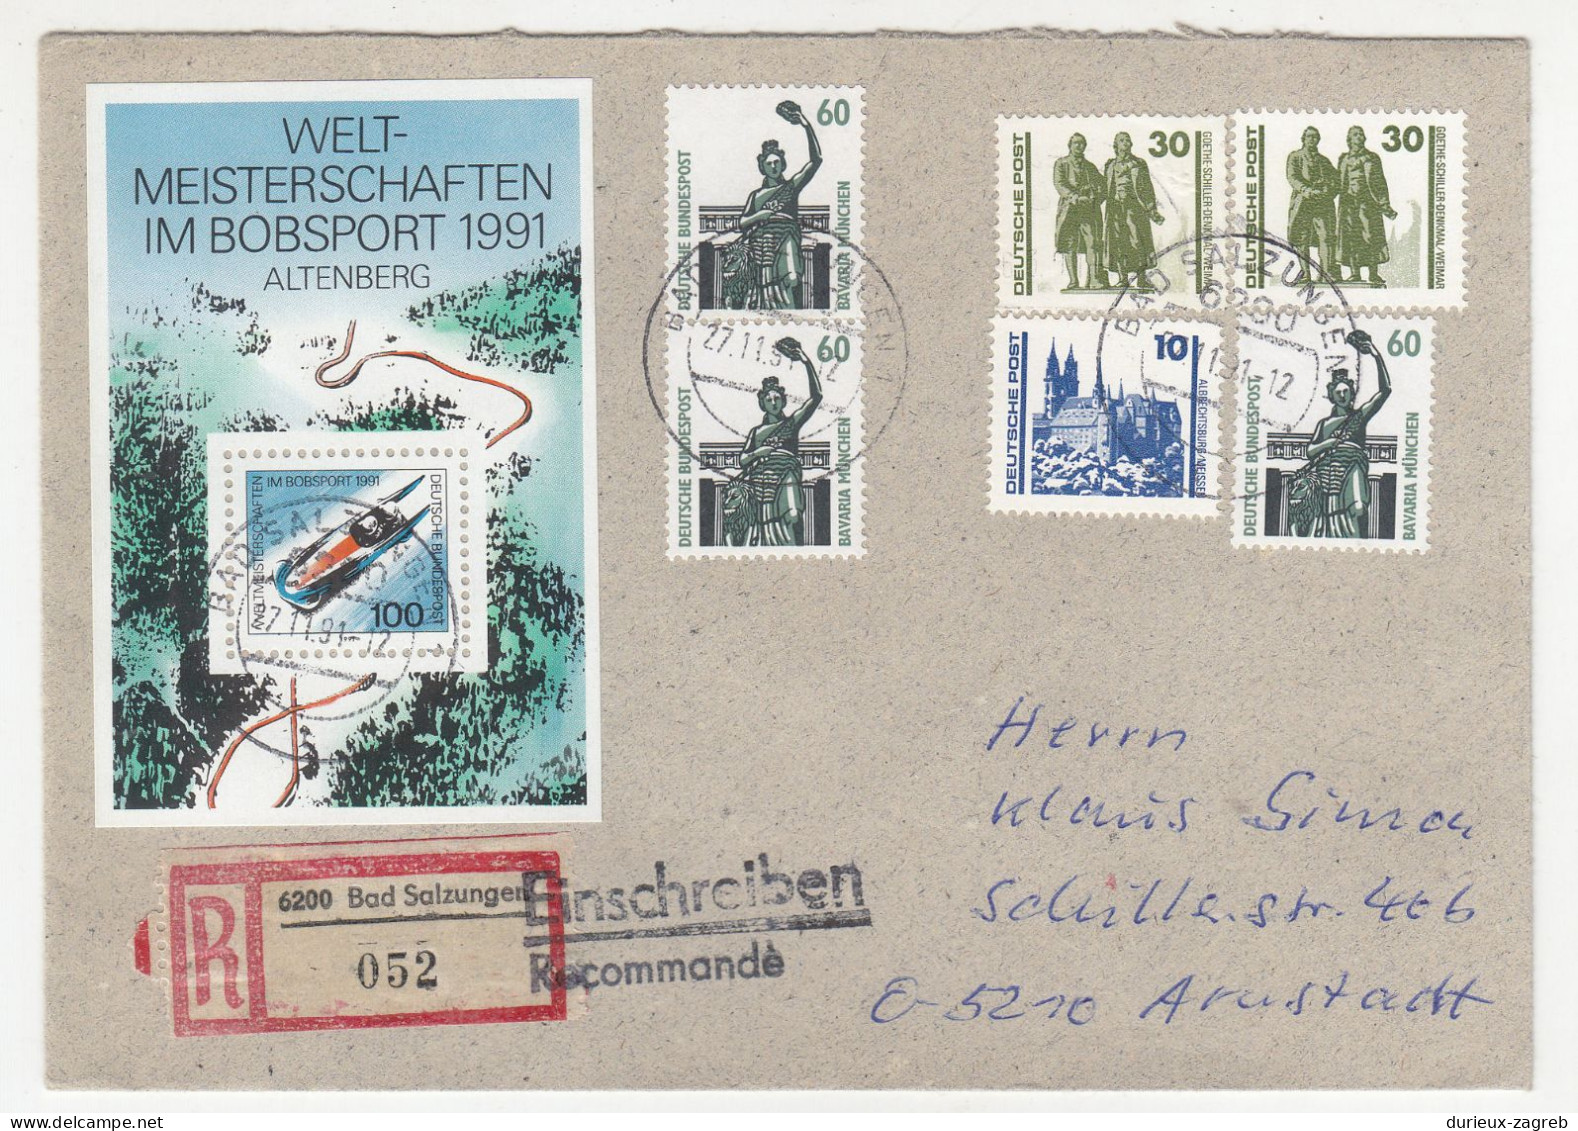 Germany Mixed Franking Germany Bund / DDR On Letter Cover Posted Registered 1991 Bad Salzungen B240510 - Briefe U. Dokumente